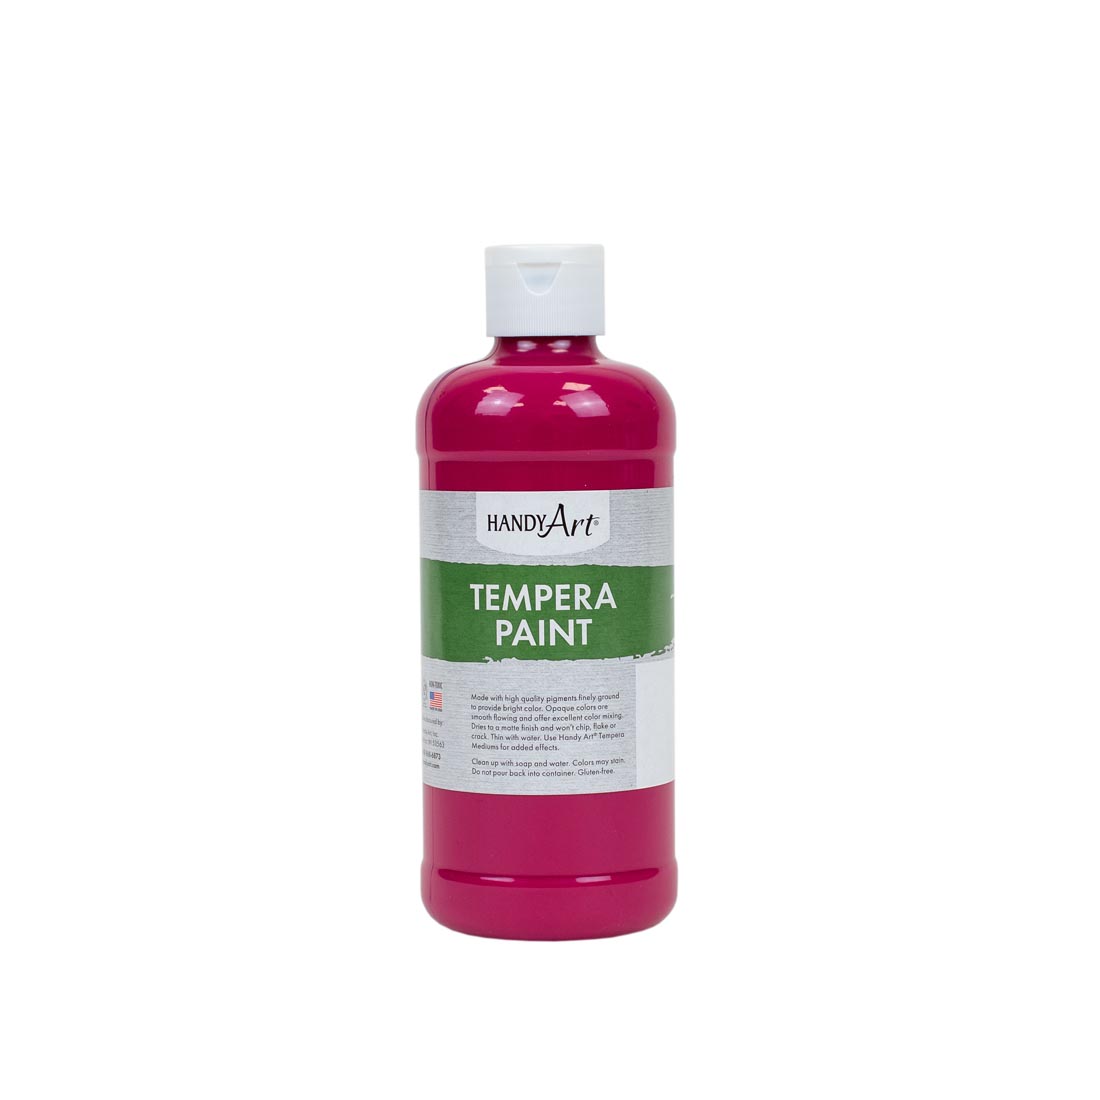 Pint bottle of Magenta Handy Art Tempera Paint